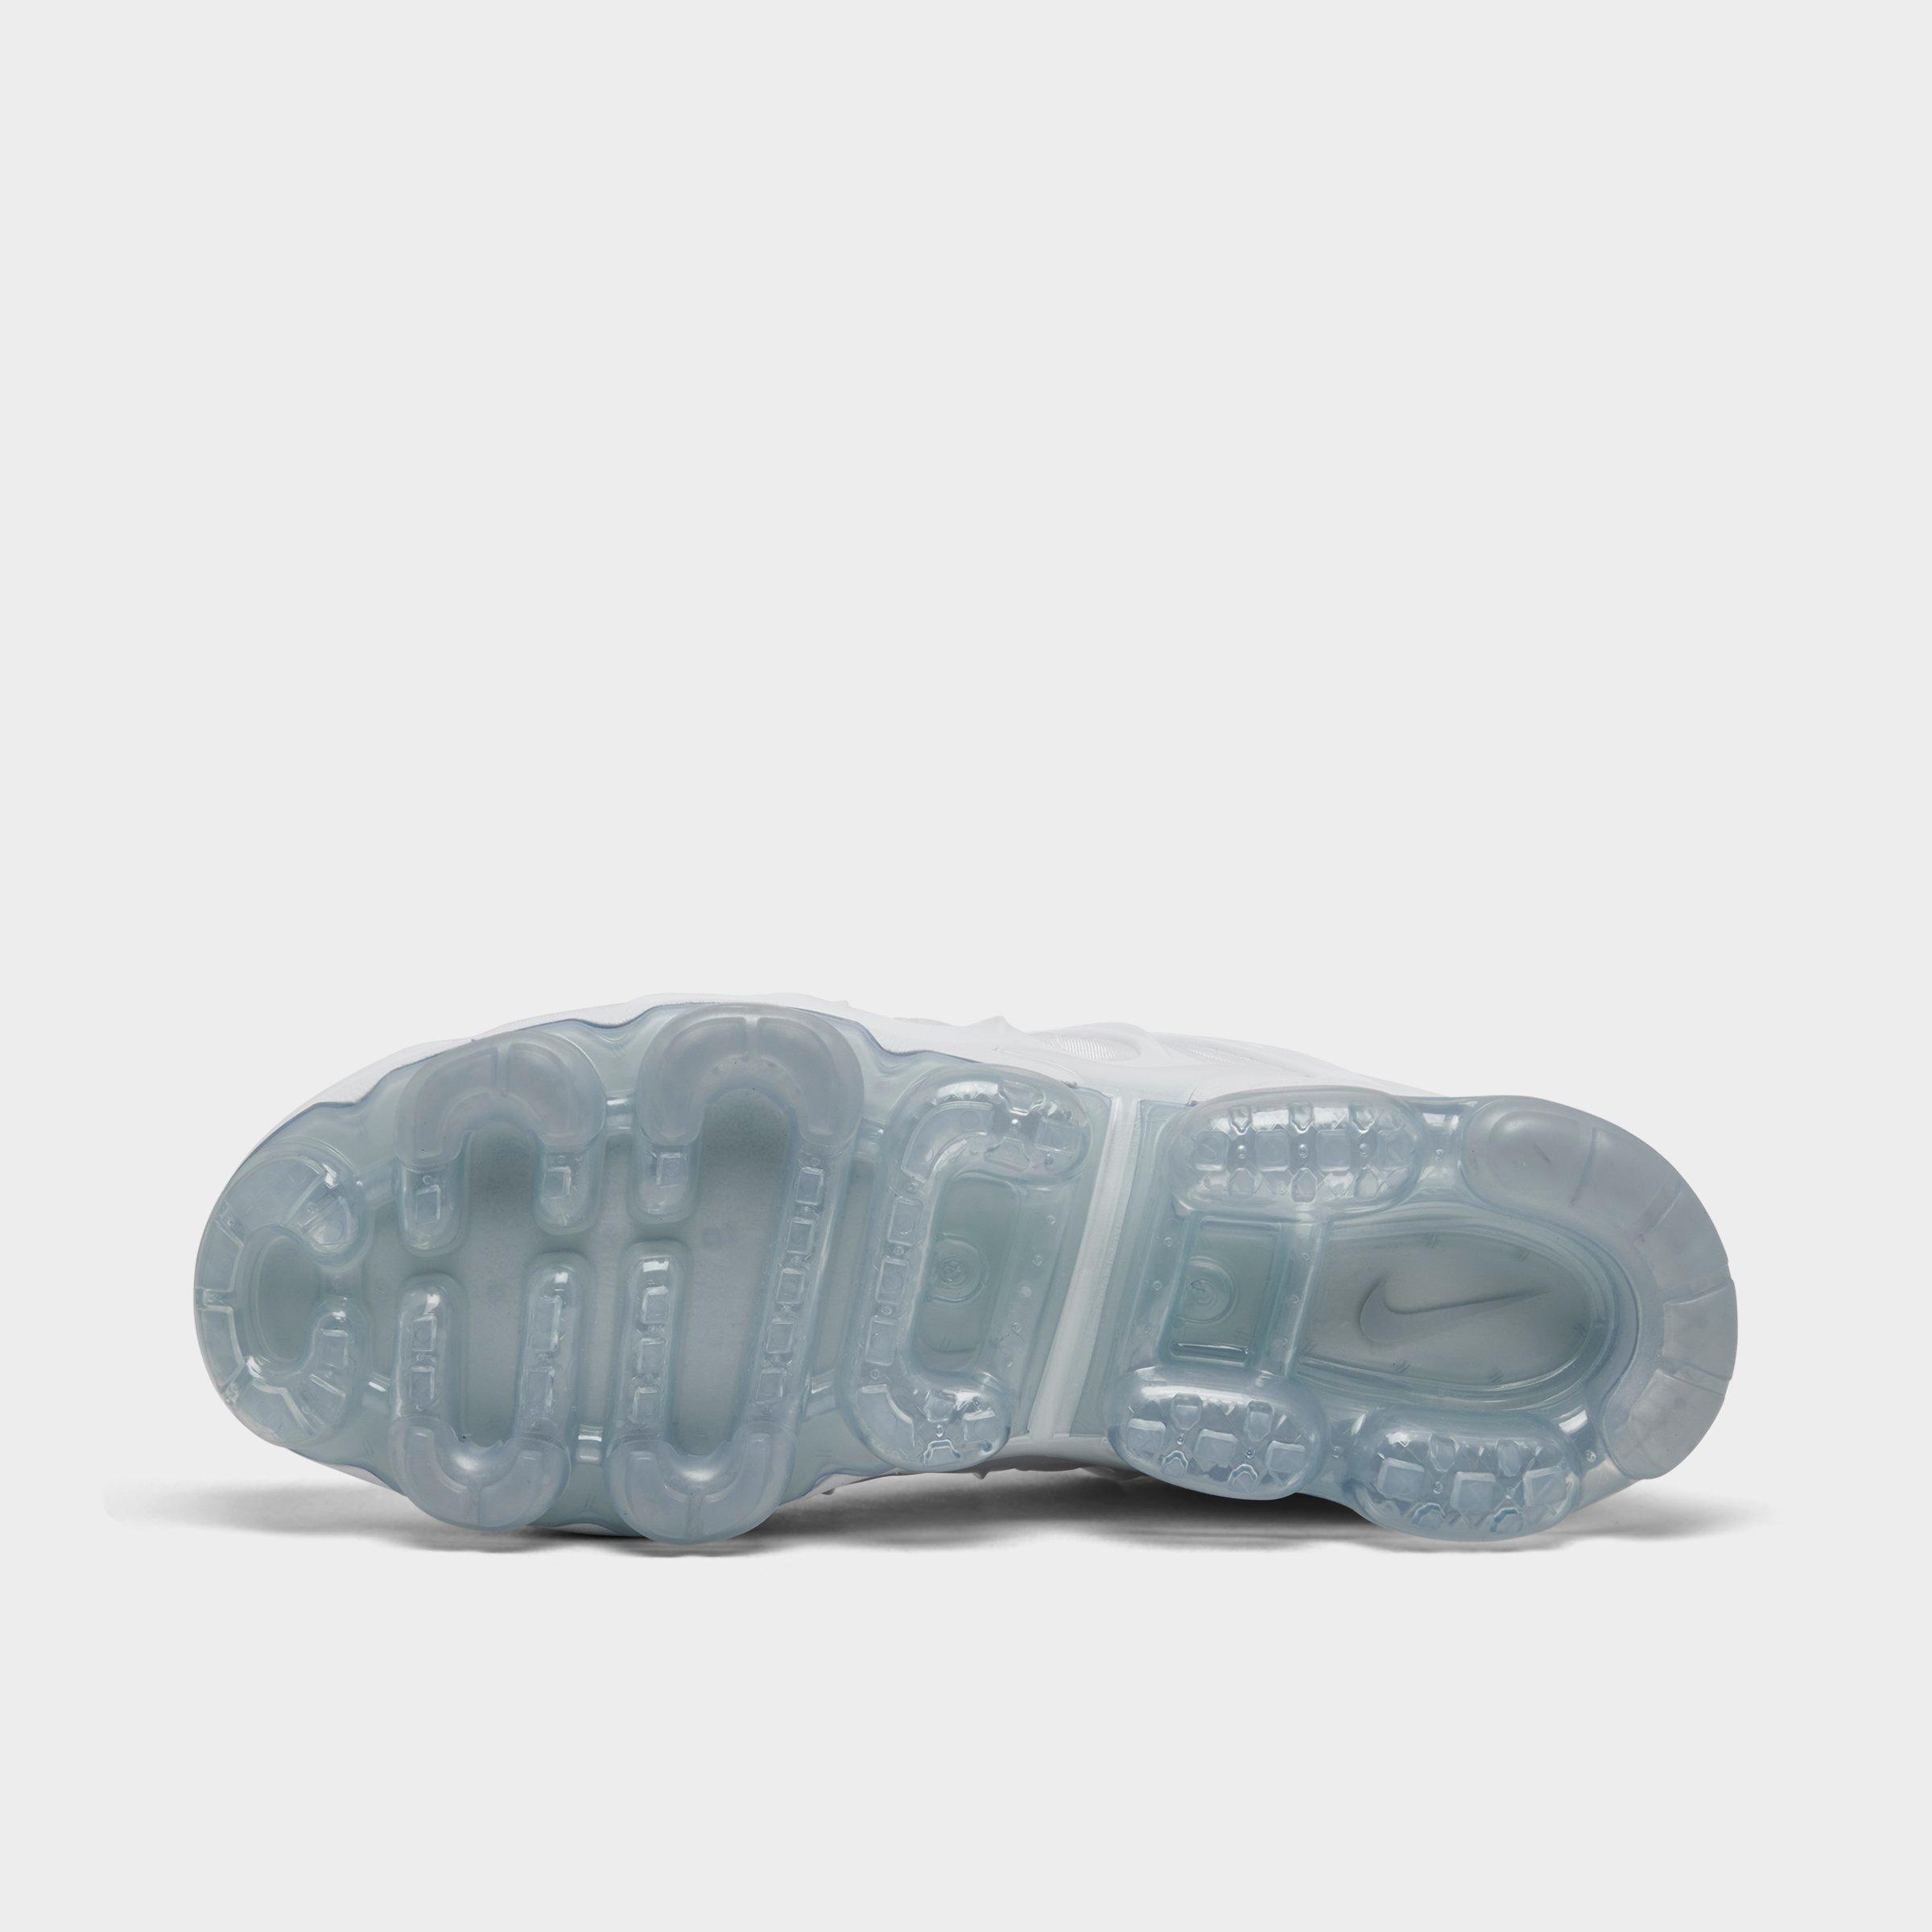 vapormax bottom of shoe